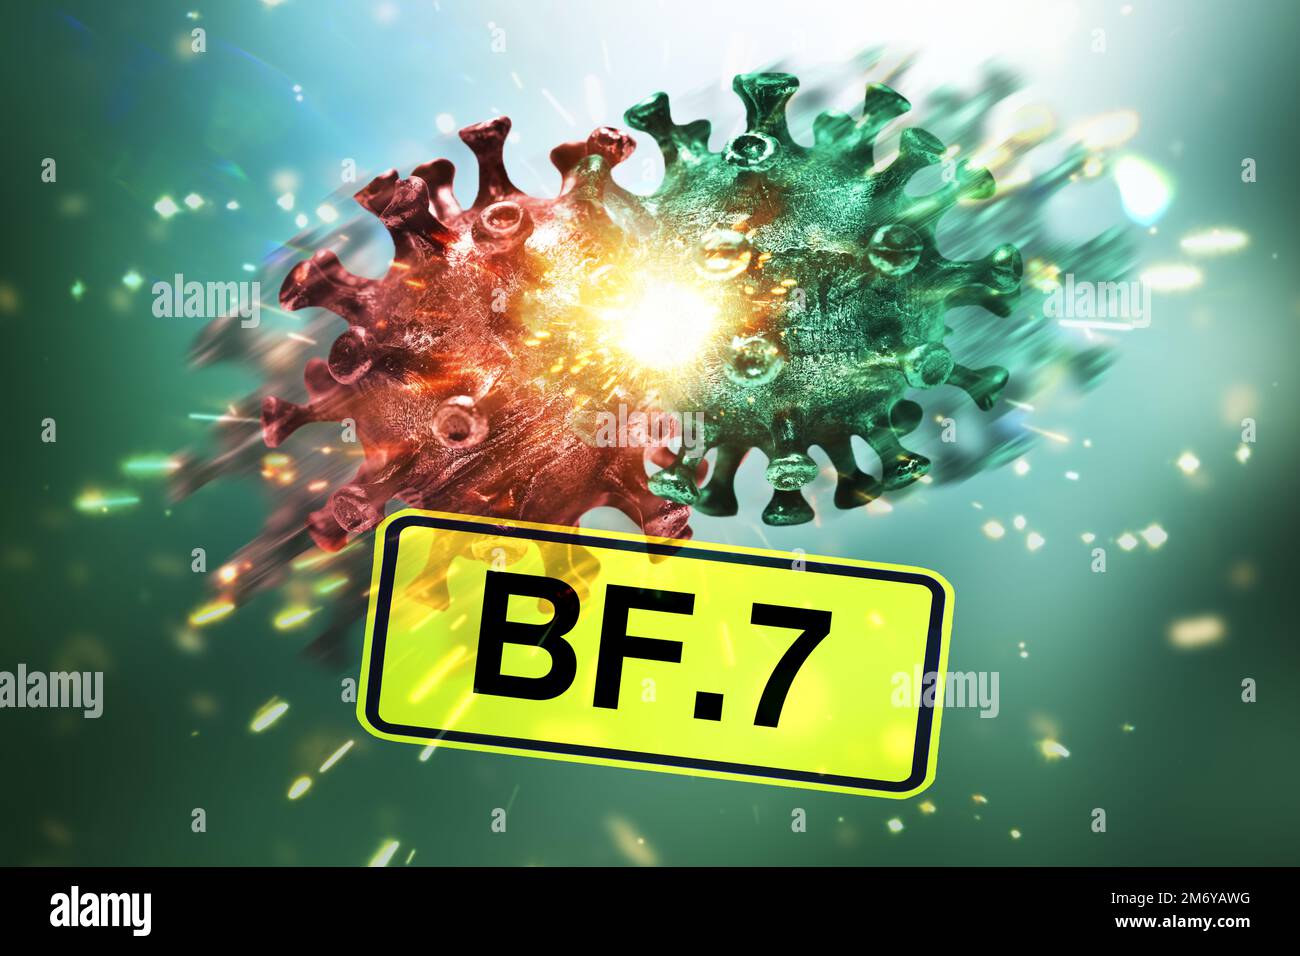 Corona variante BF.7, image symbolique Banque D'Images